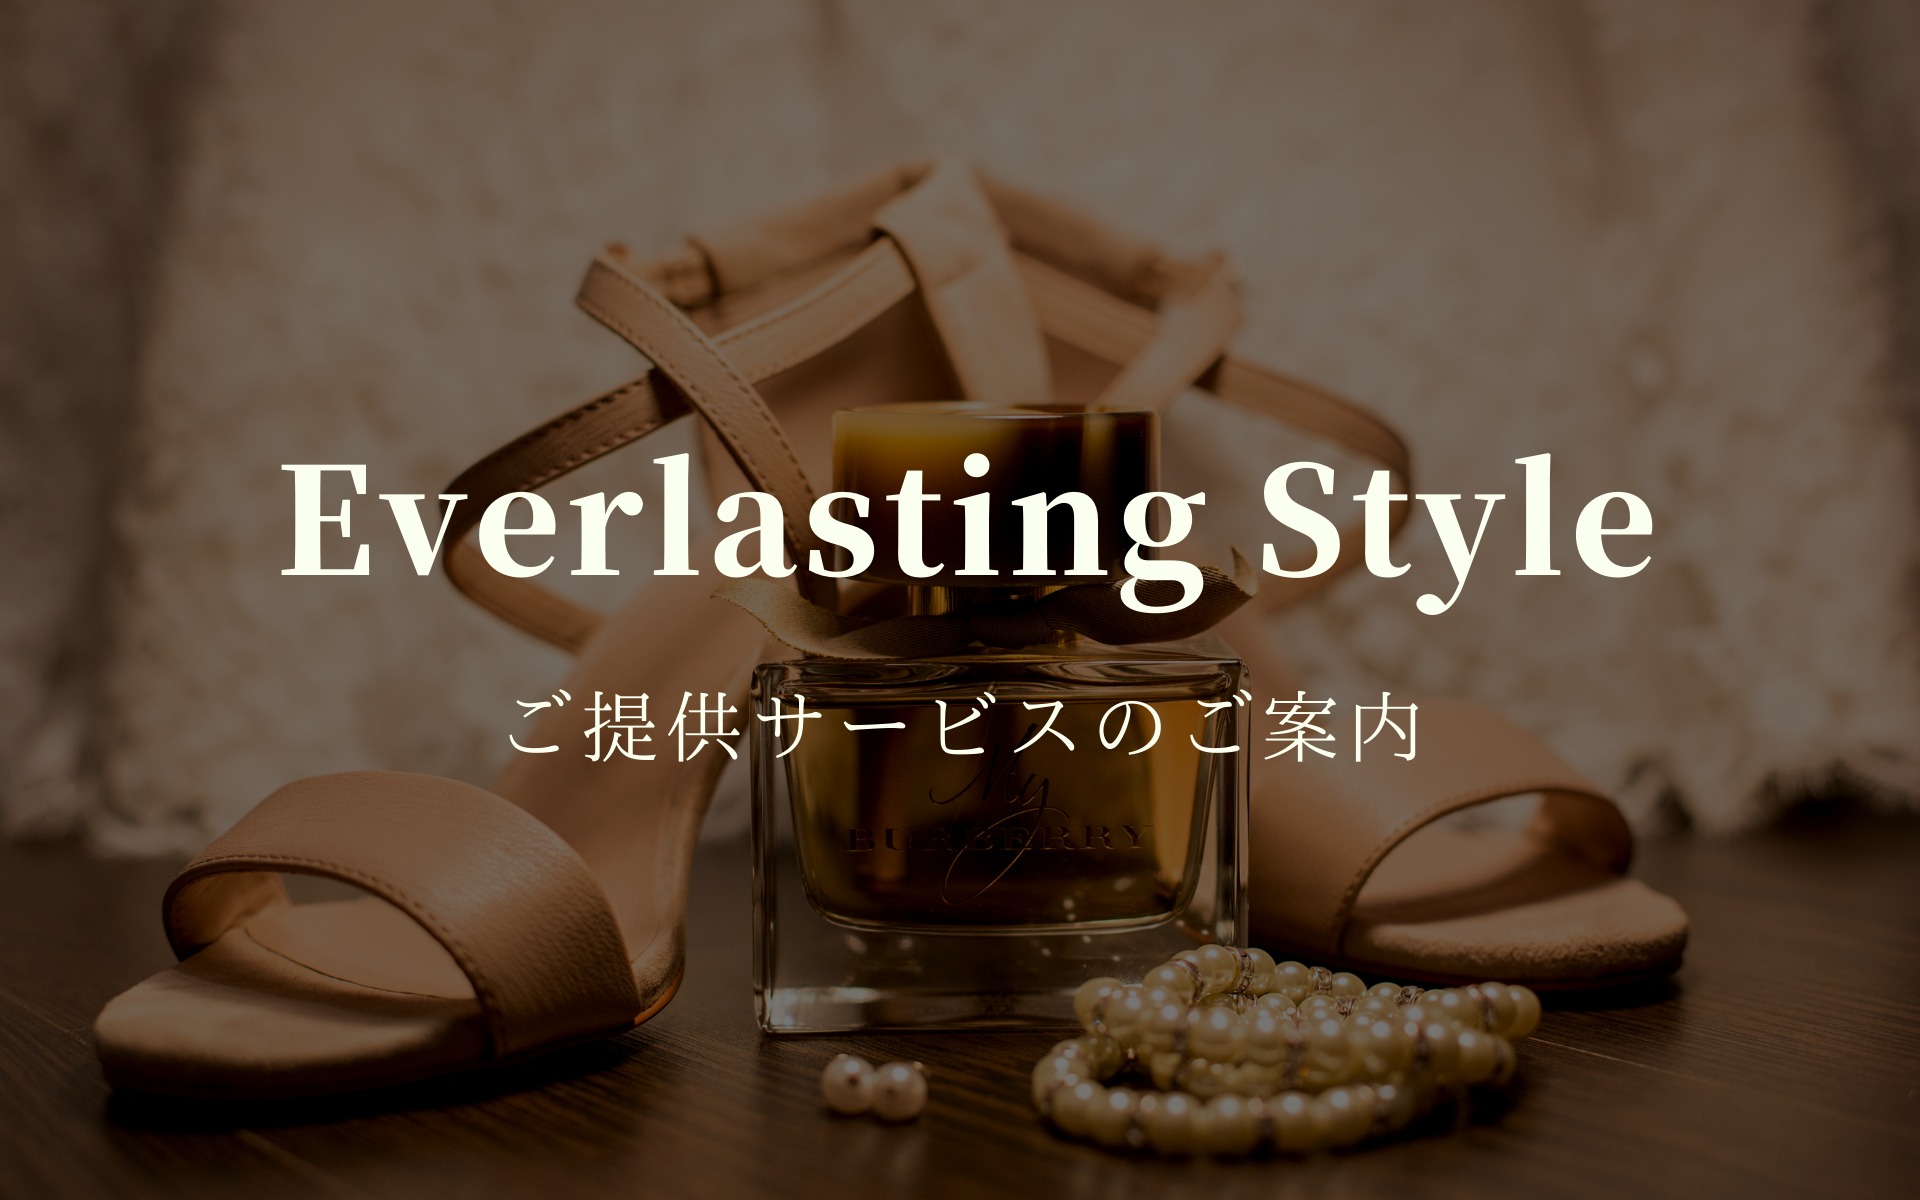 Everlasting Style